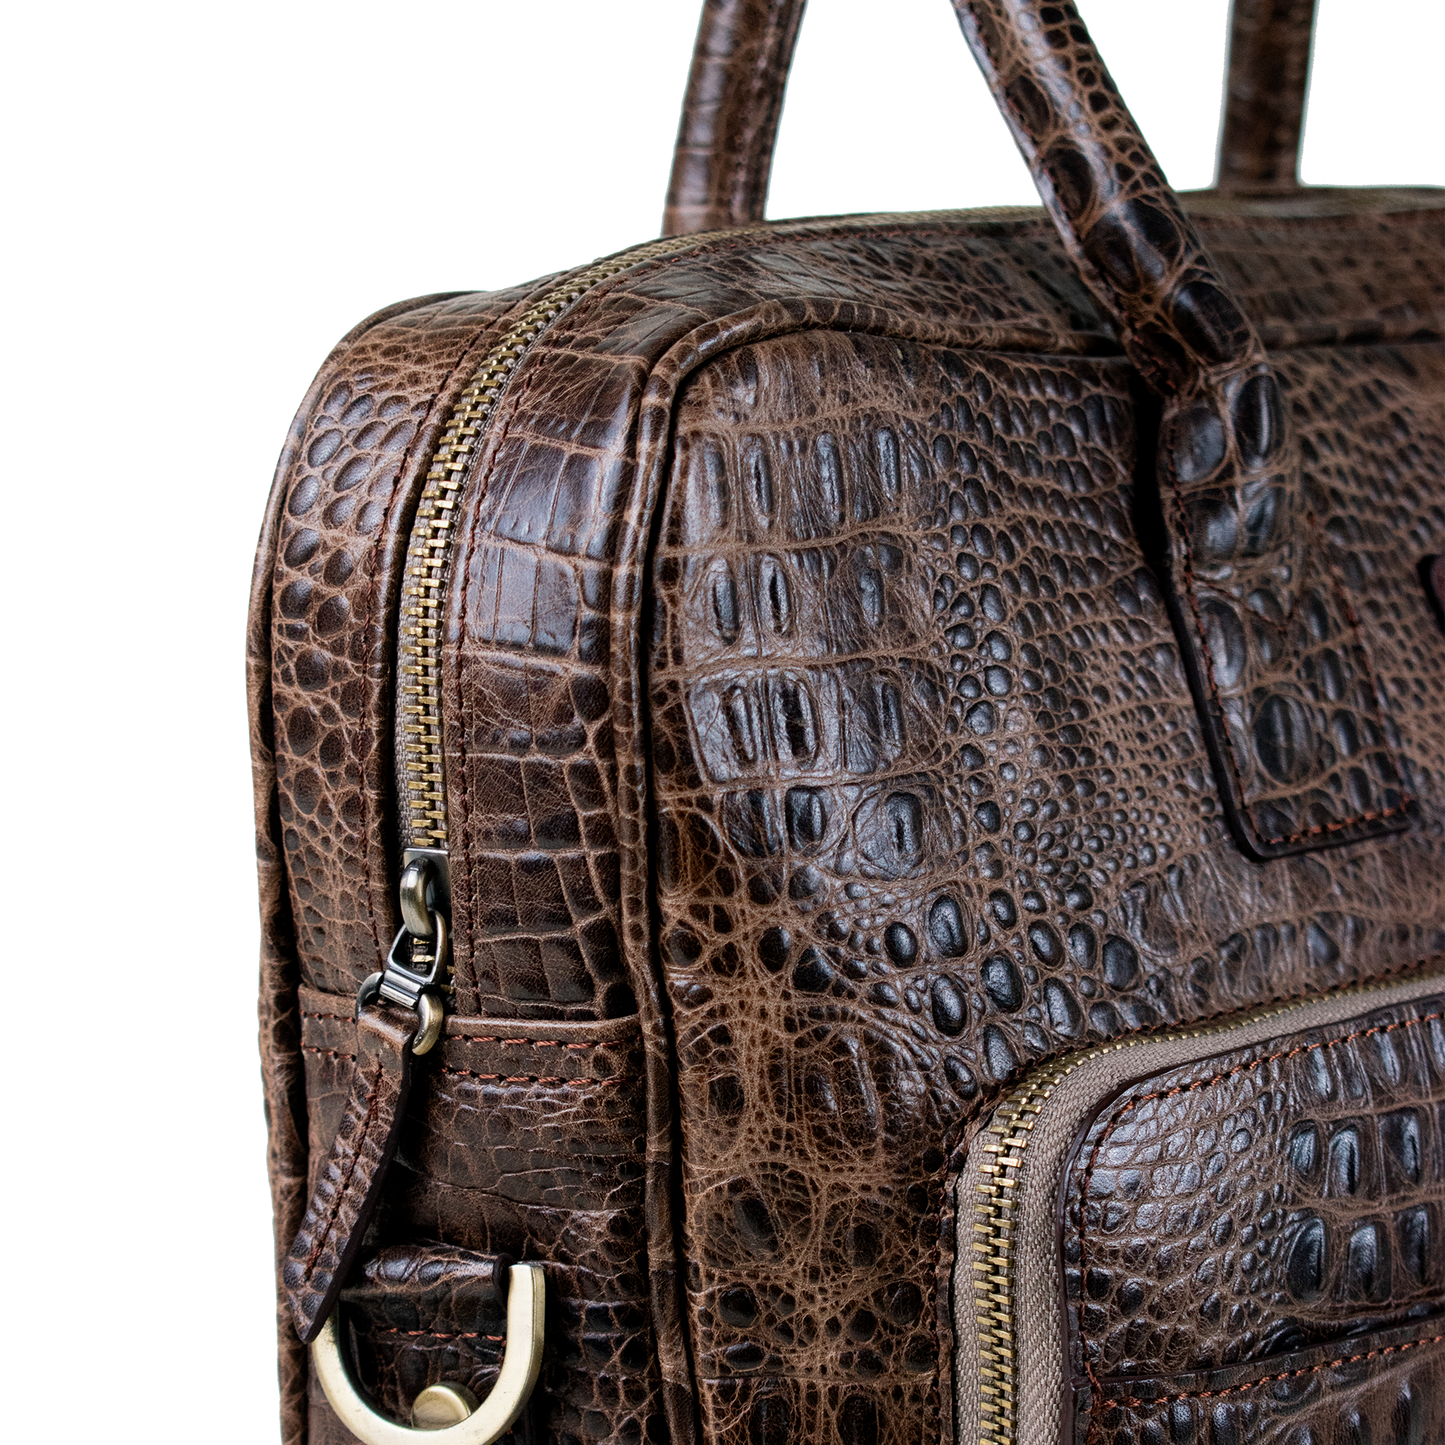 Croco design leather Tony Bellucci bag